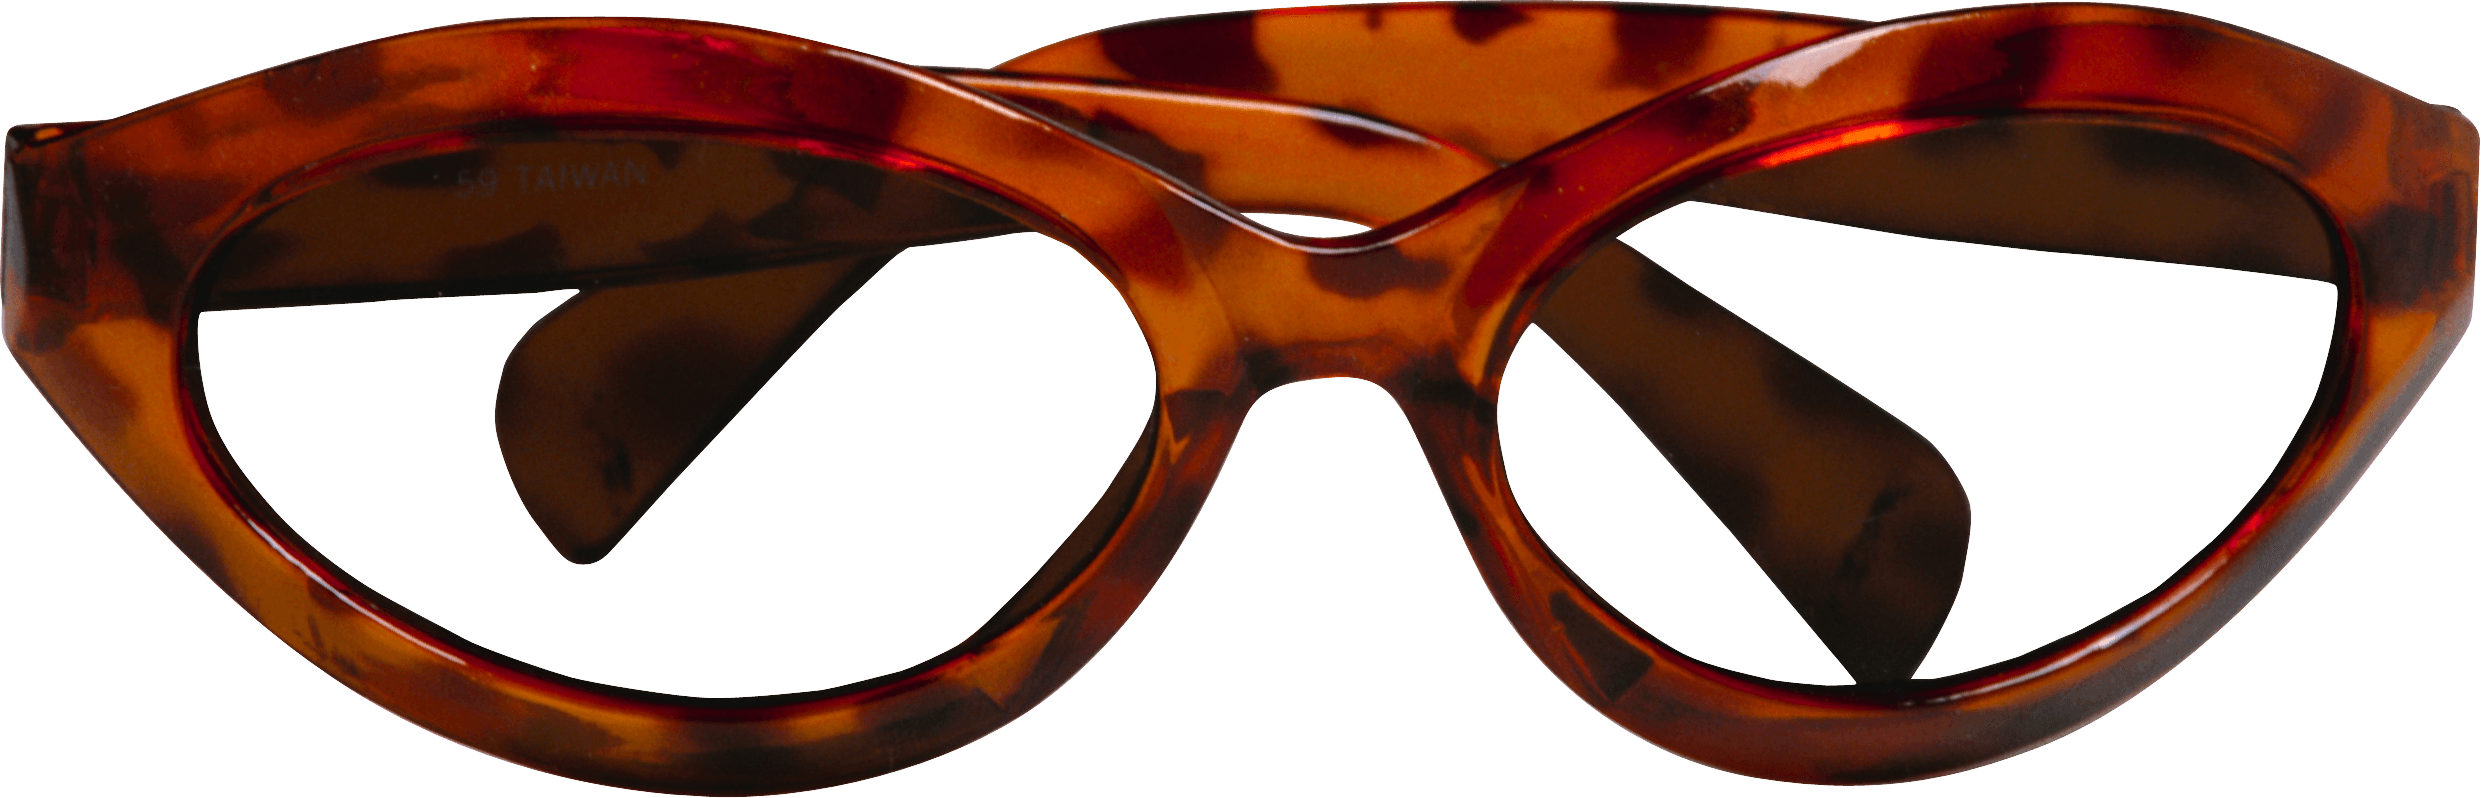 Glasses Png Image PNG Image